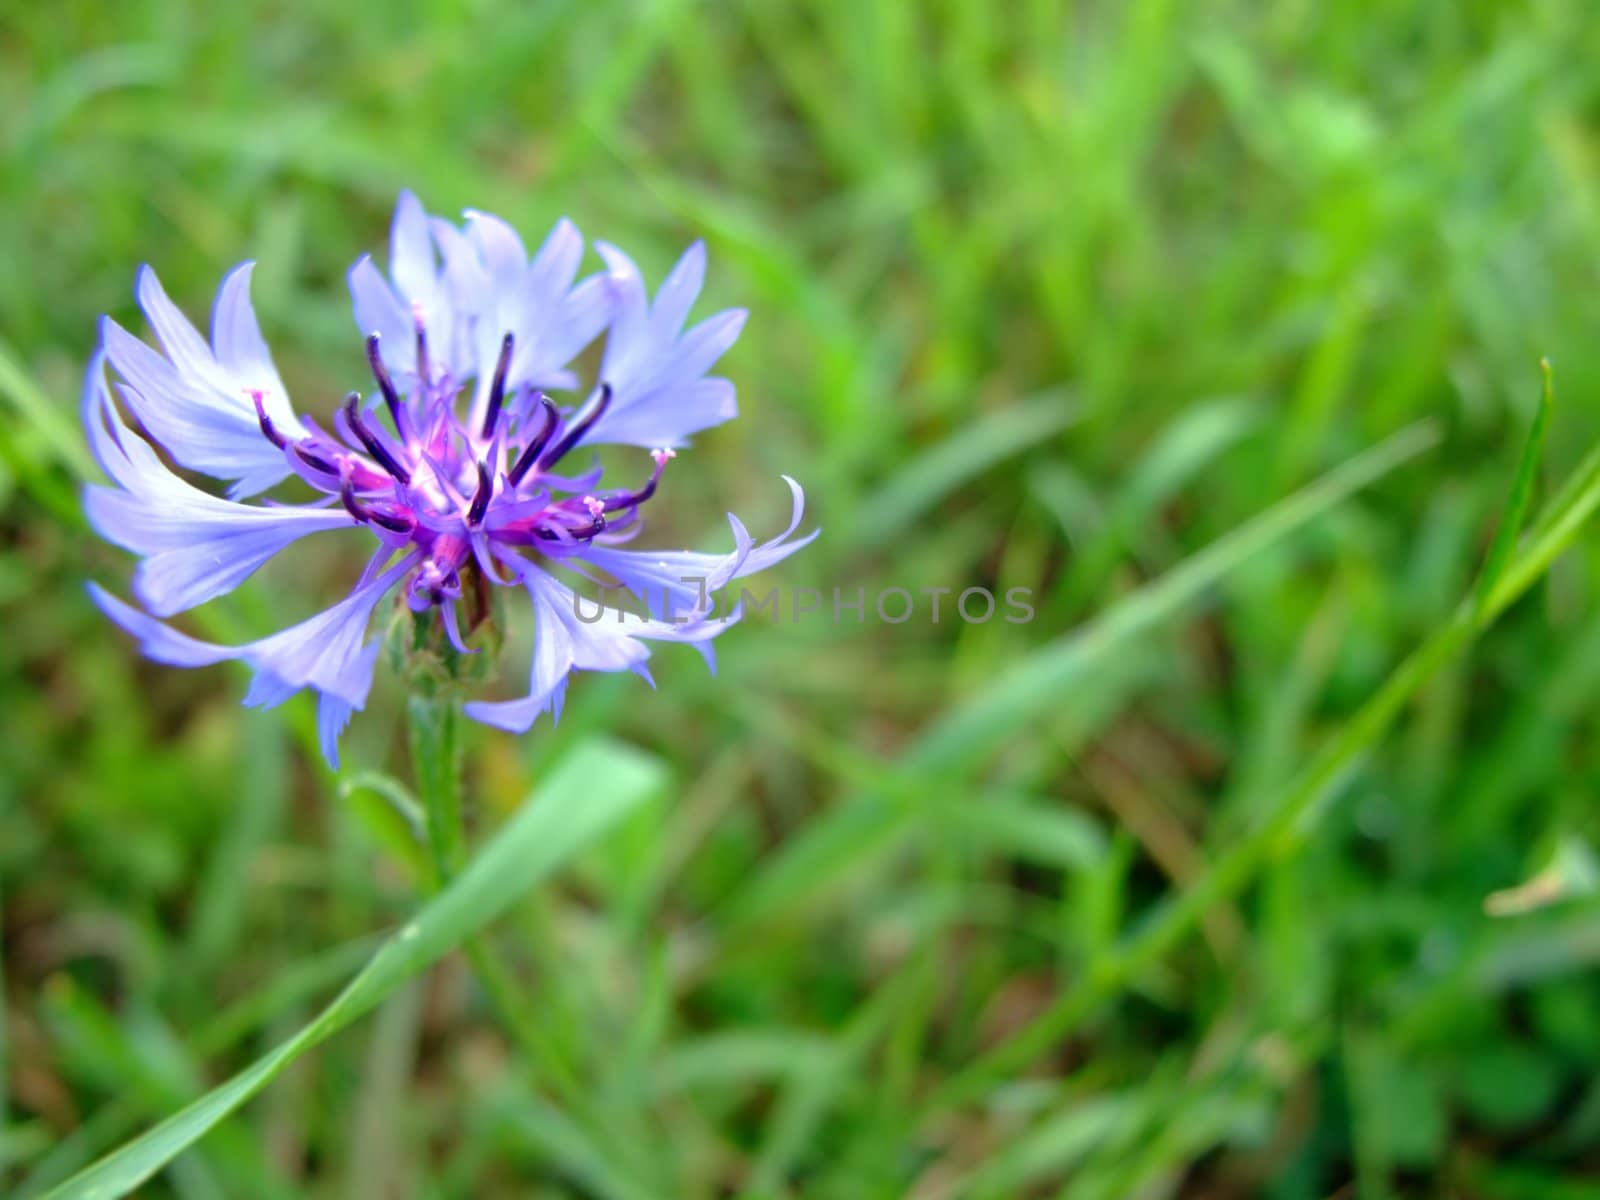 Blue cornflower in the green grass